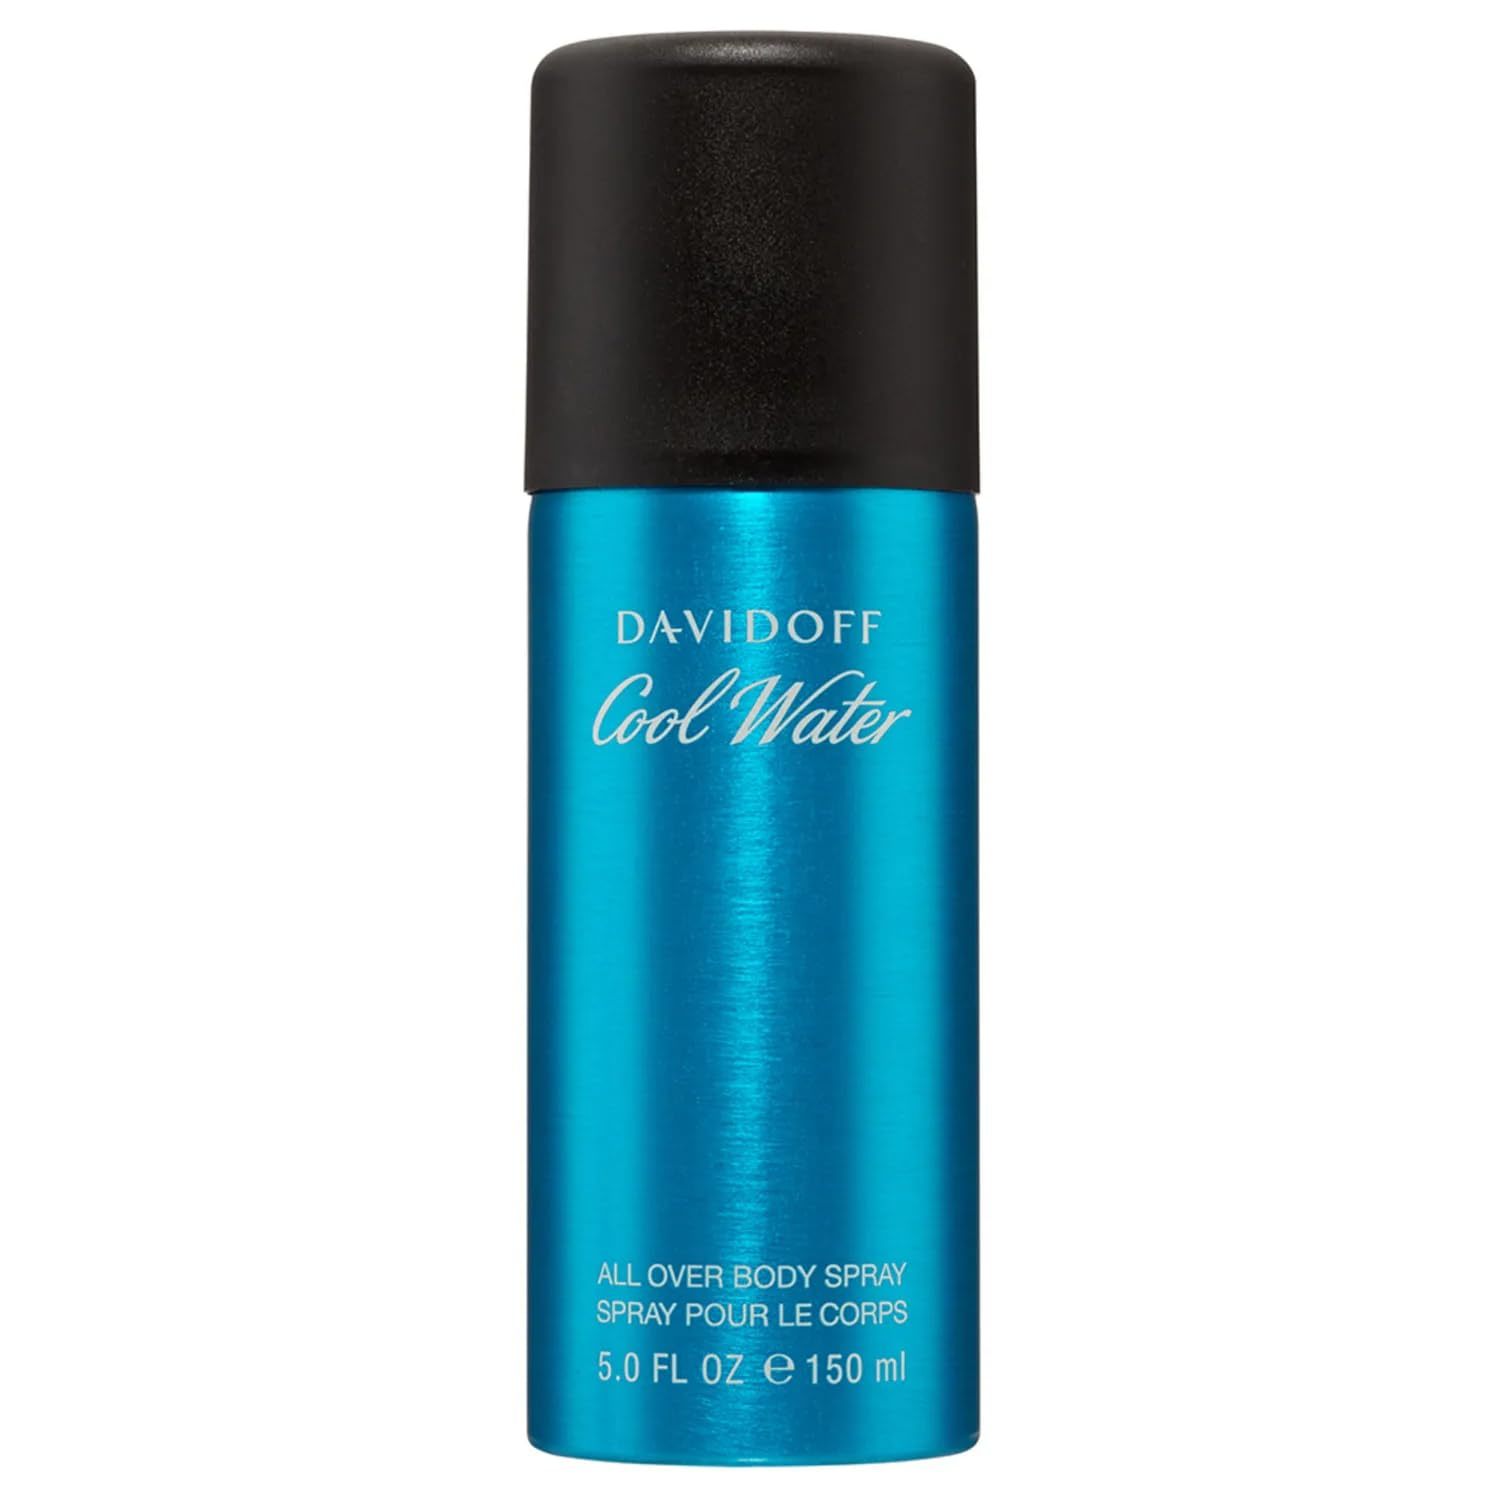 Davidoff Cool Water Body Spray for Men, 5.0 Ounce - $24.99